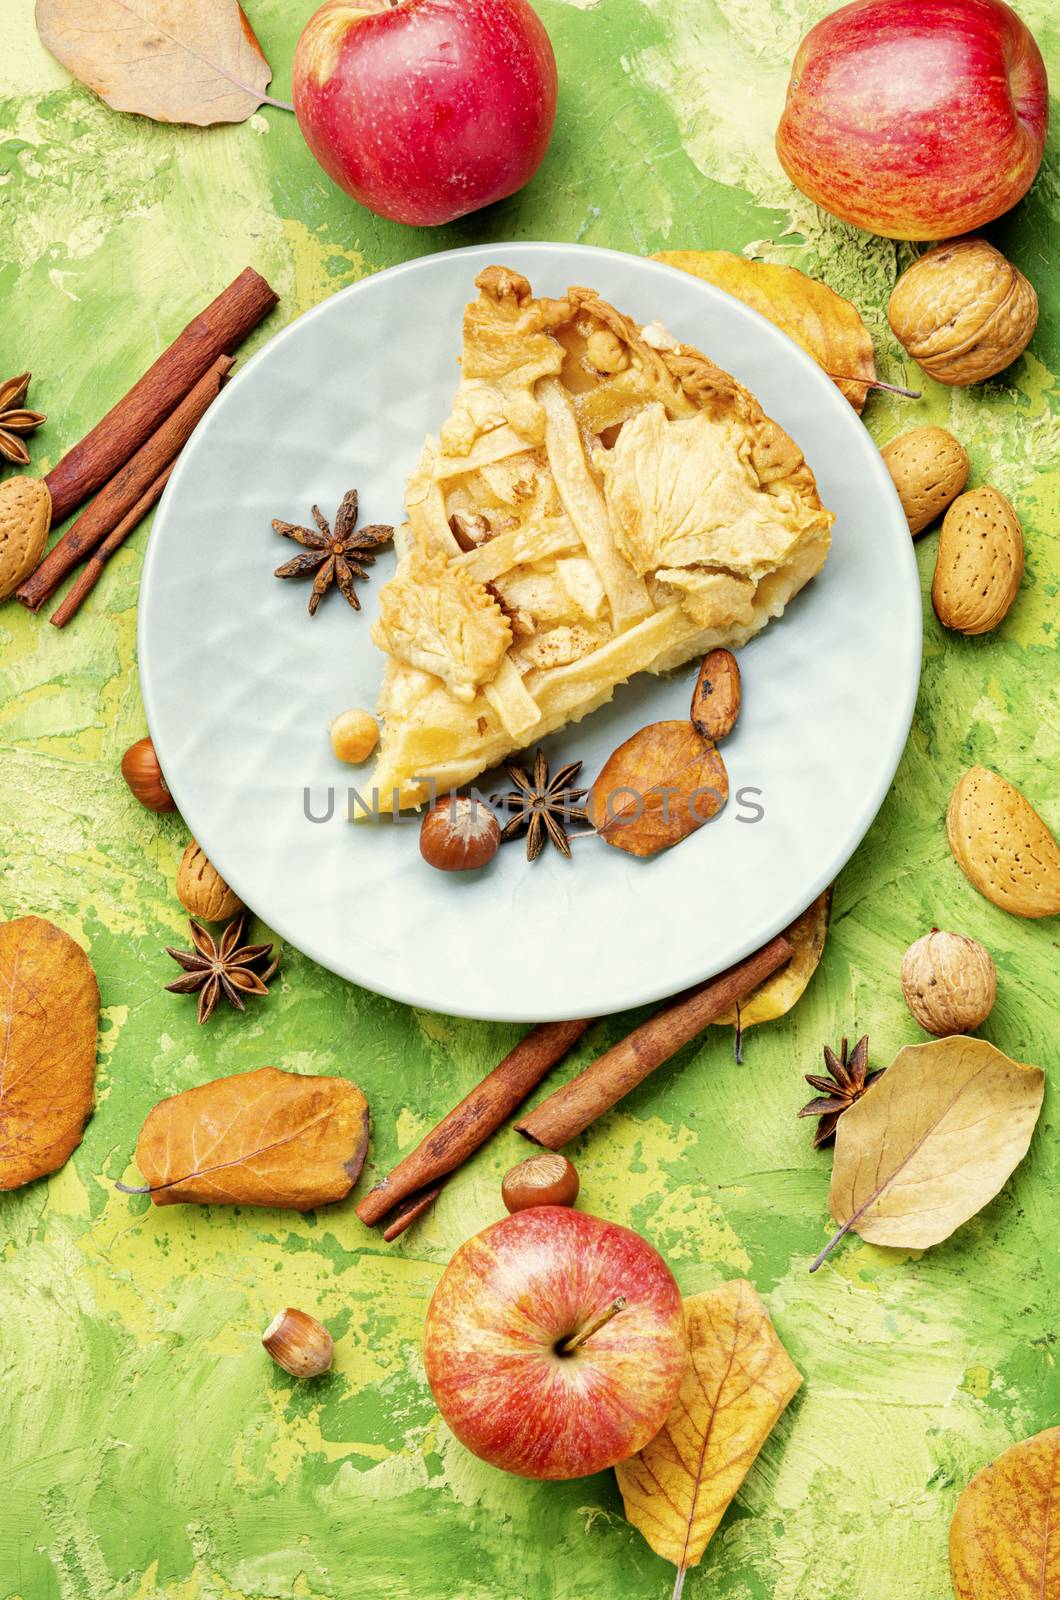 Slice of apple pie by LMykola